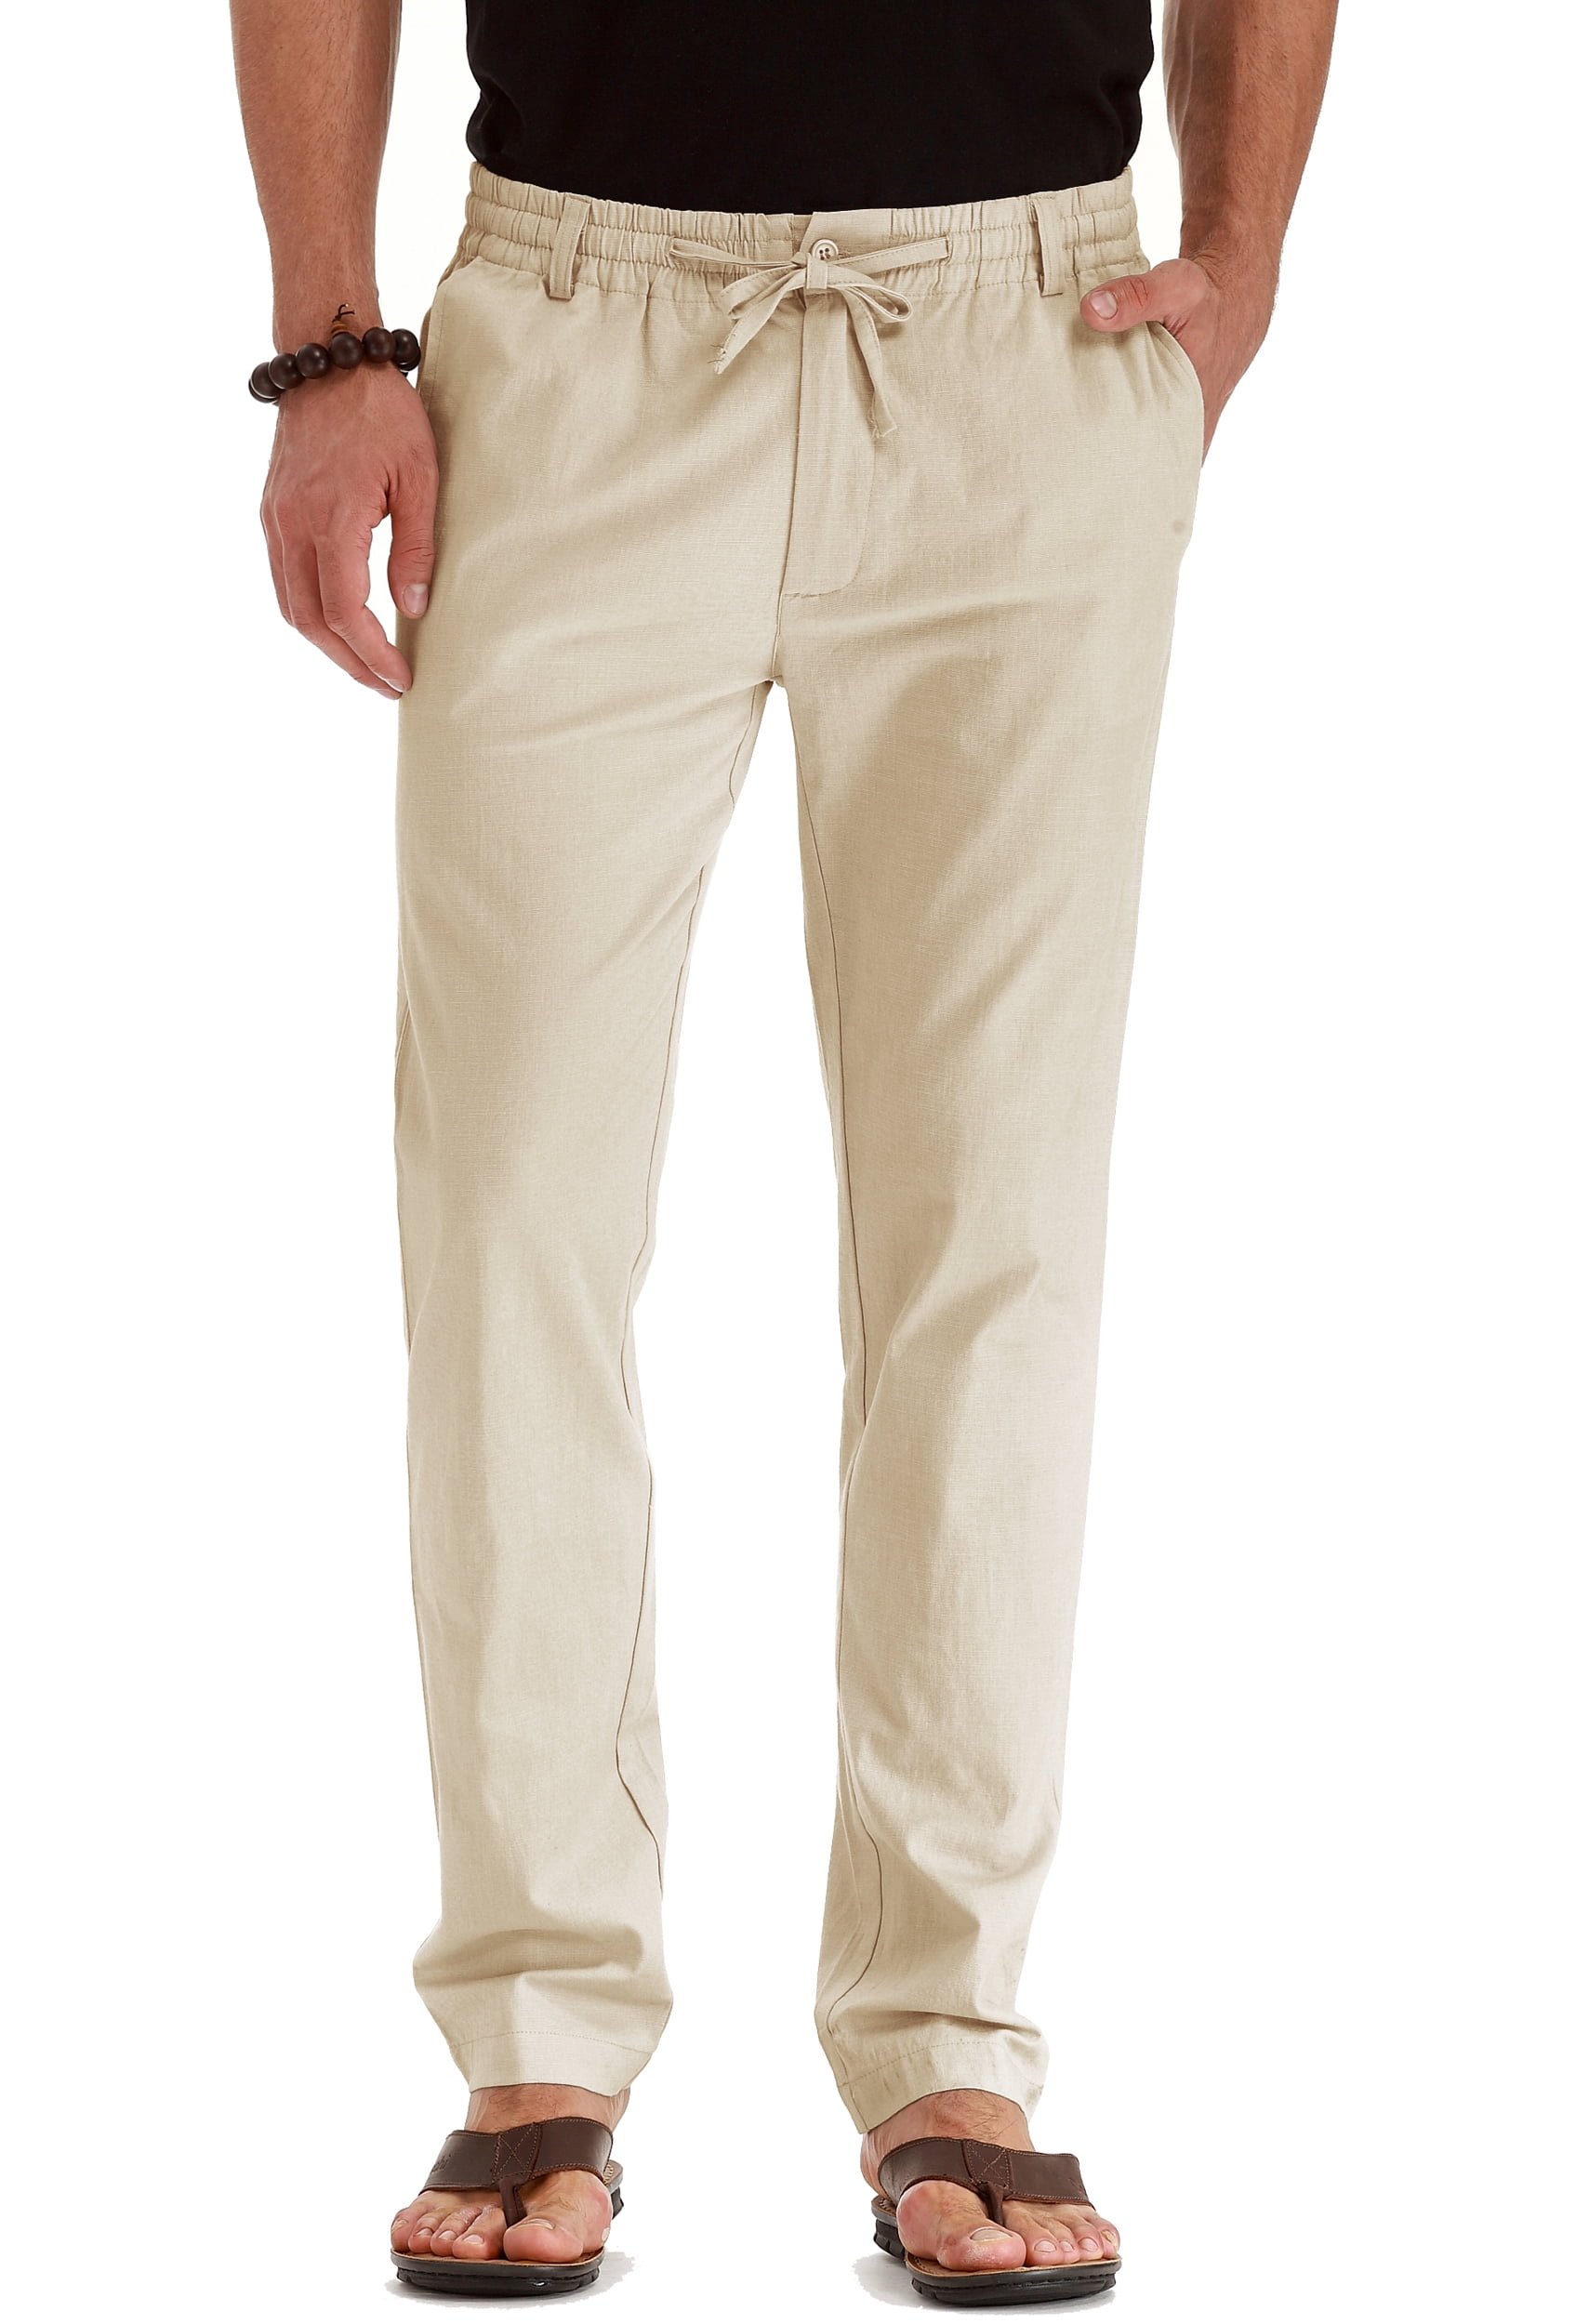 JWD Men's Drawstring Linen Pants Casual Summer Beach Loose Trousers Beige-US 40